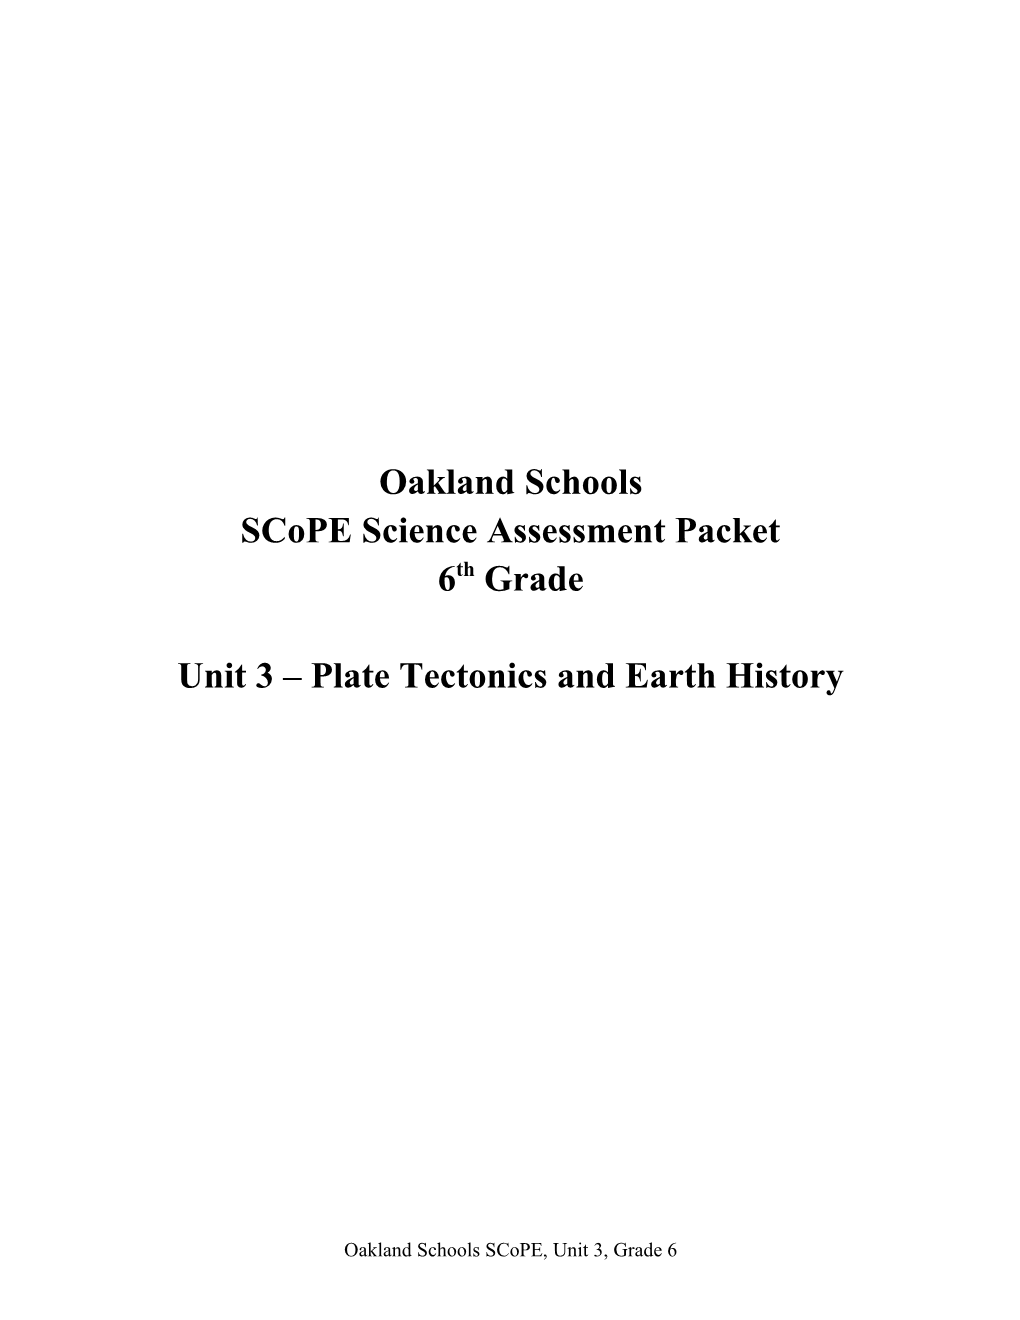 Test Blueprint for Grade 6 Plate Tectonics and Earth History Unit Summative Test